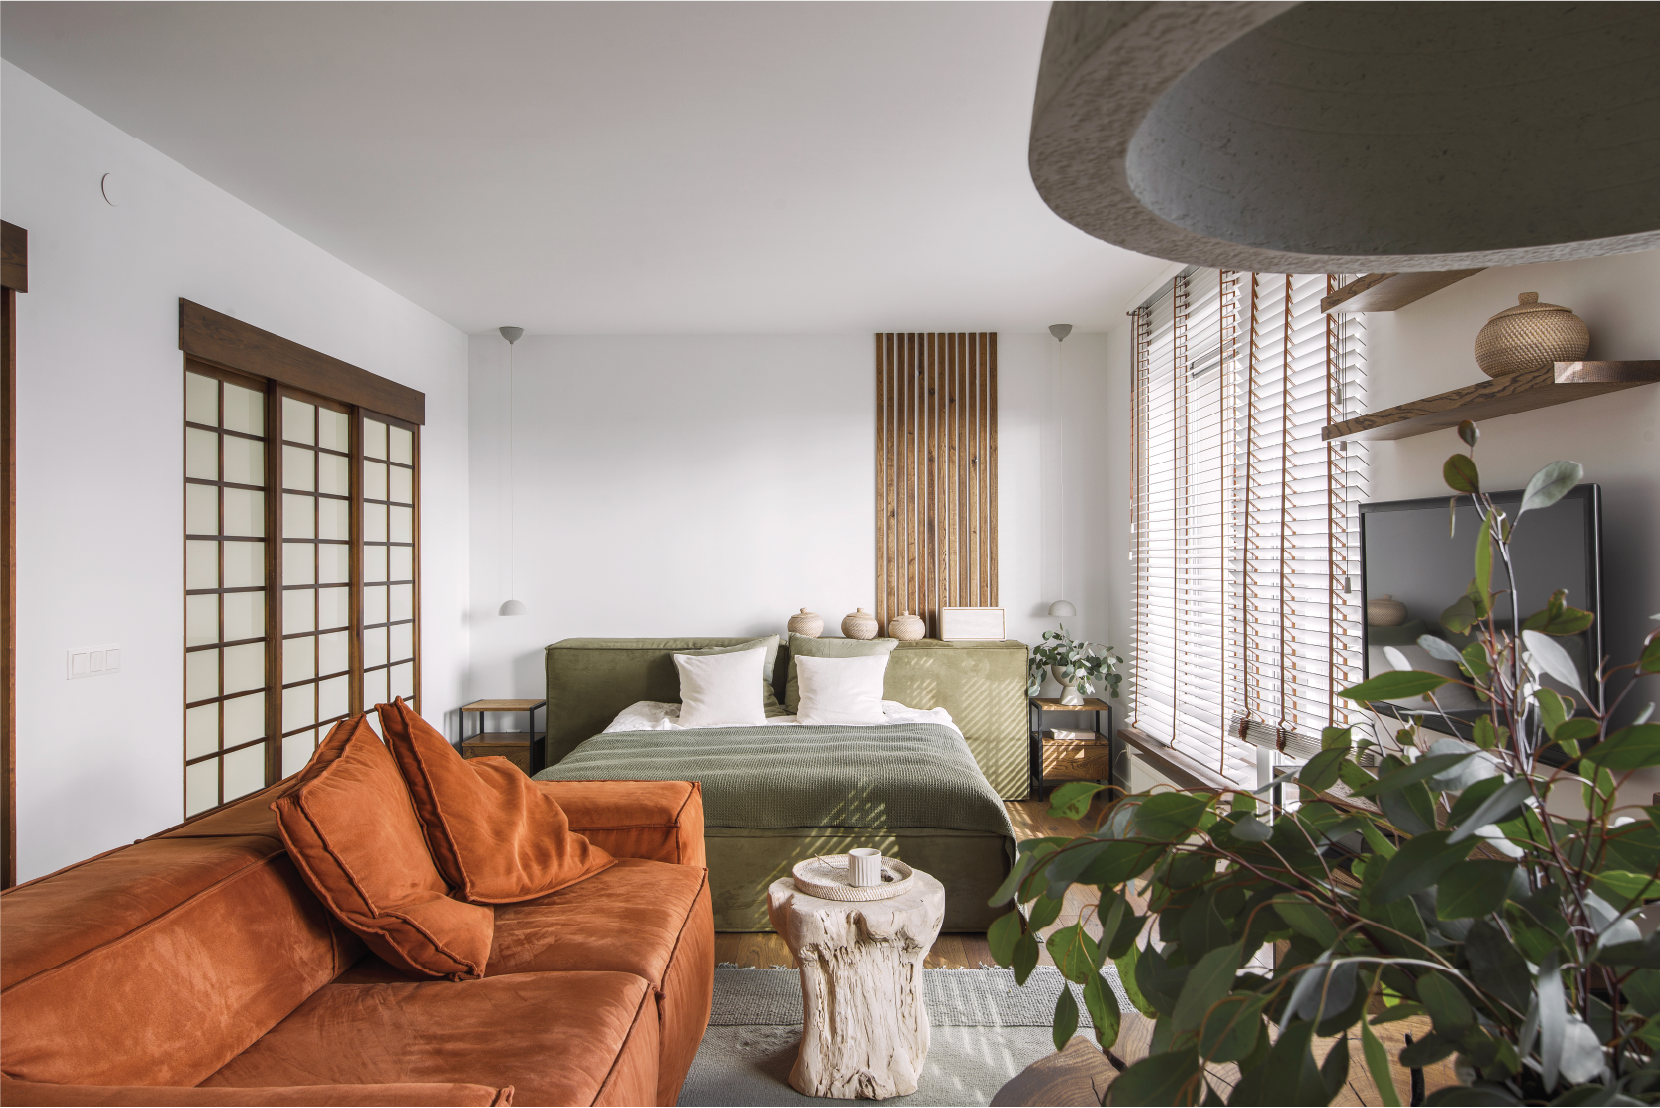 Modern holistic Bedroom Design With Plants